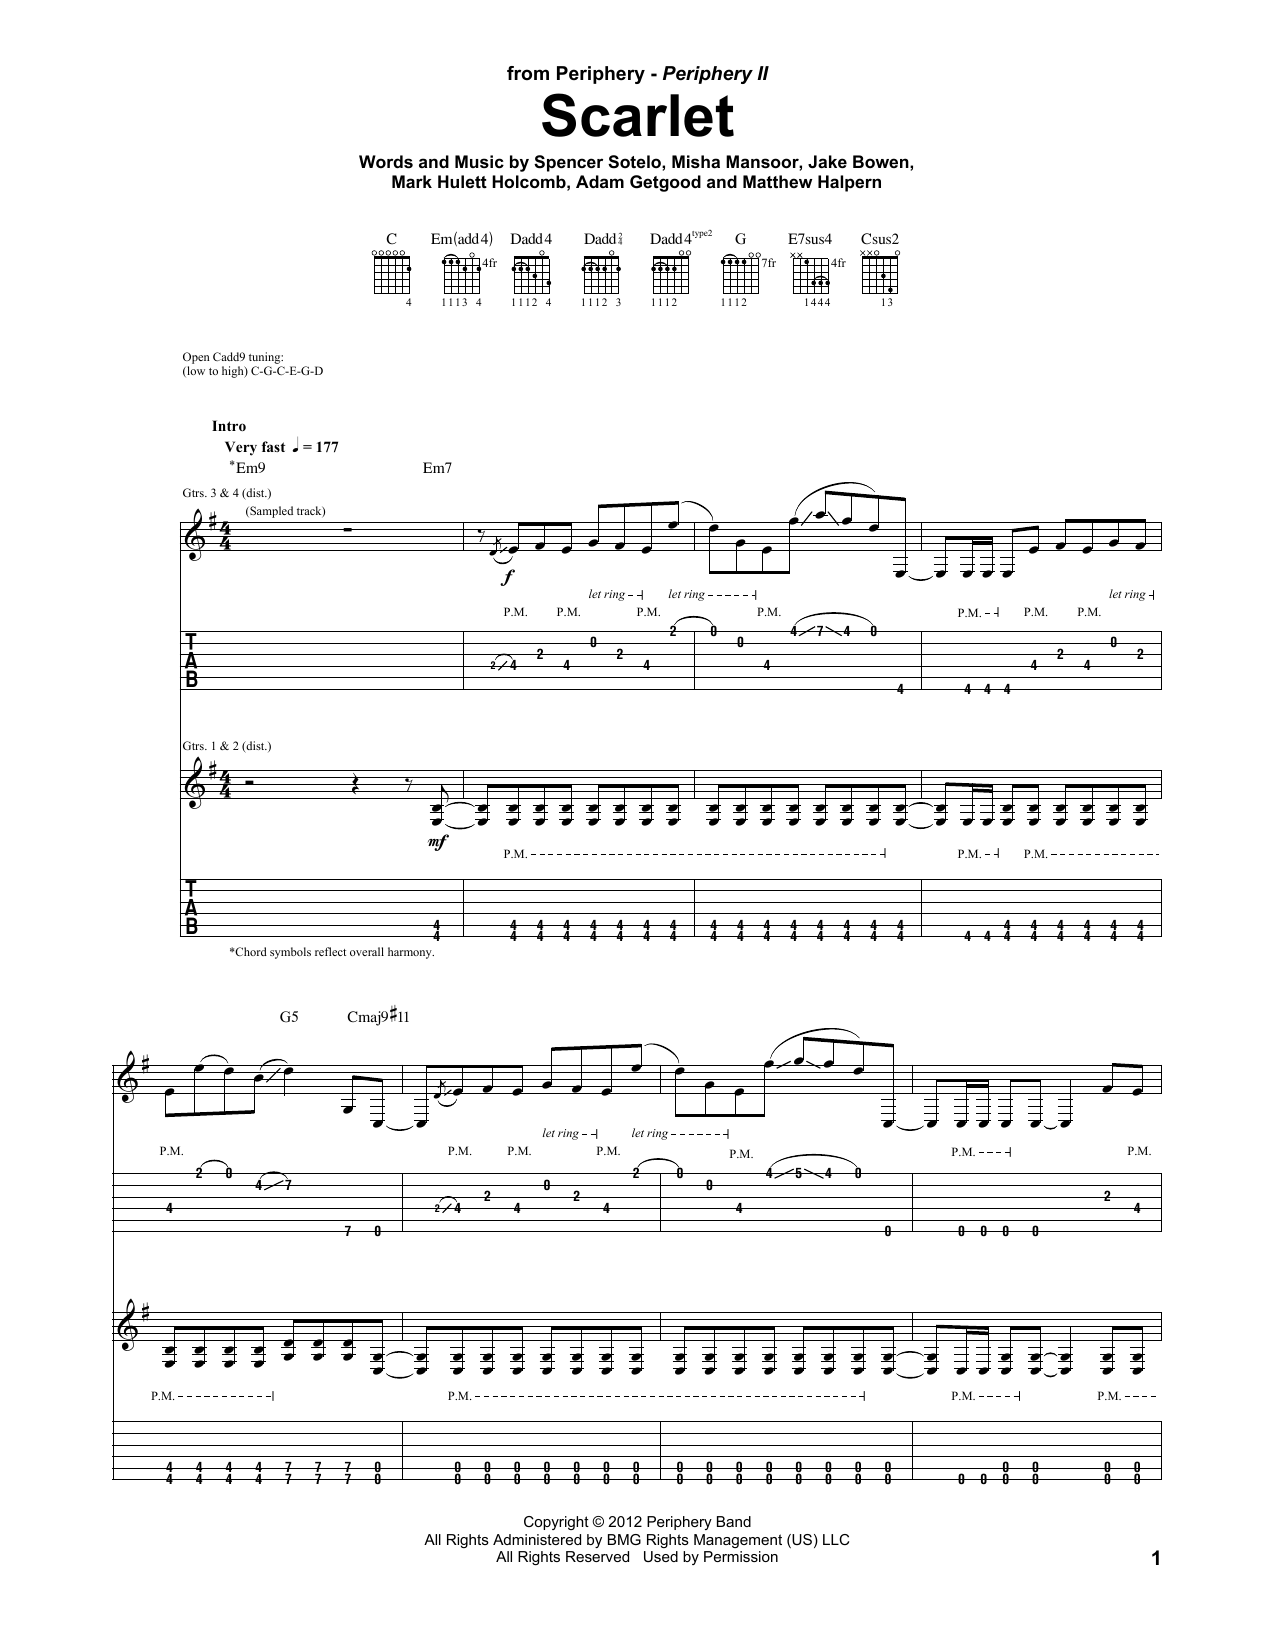 Periphery Scarlet Sheet Music Notes & Chords for Guitar Tab - Download or Print PDF